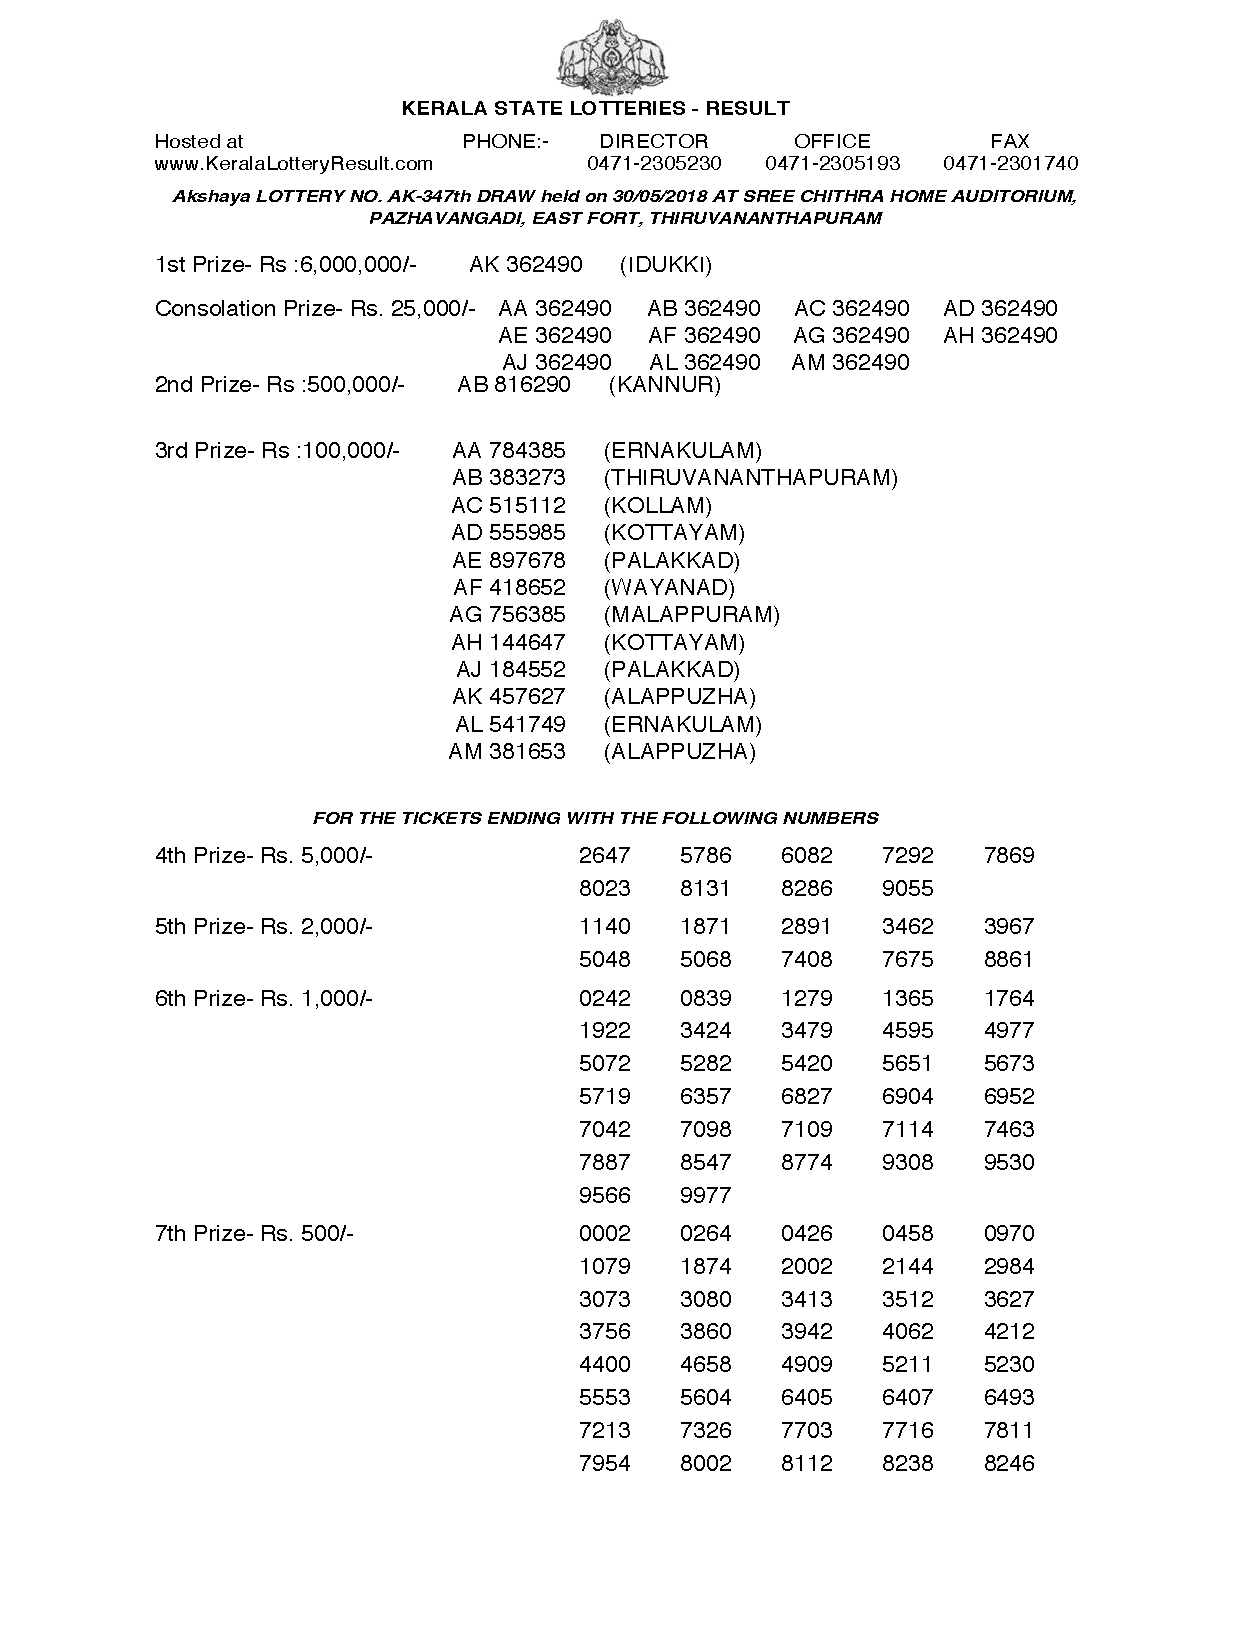 Akshaya AK347 Kerala Lottery Results Screenshot: Page 1